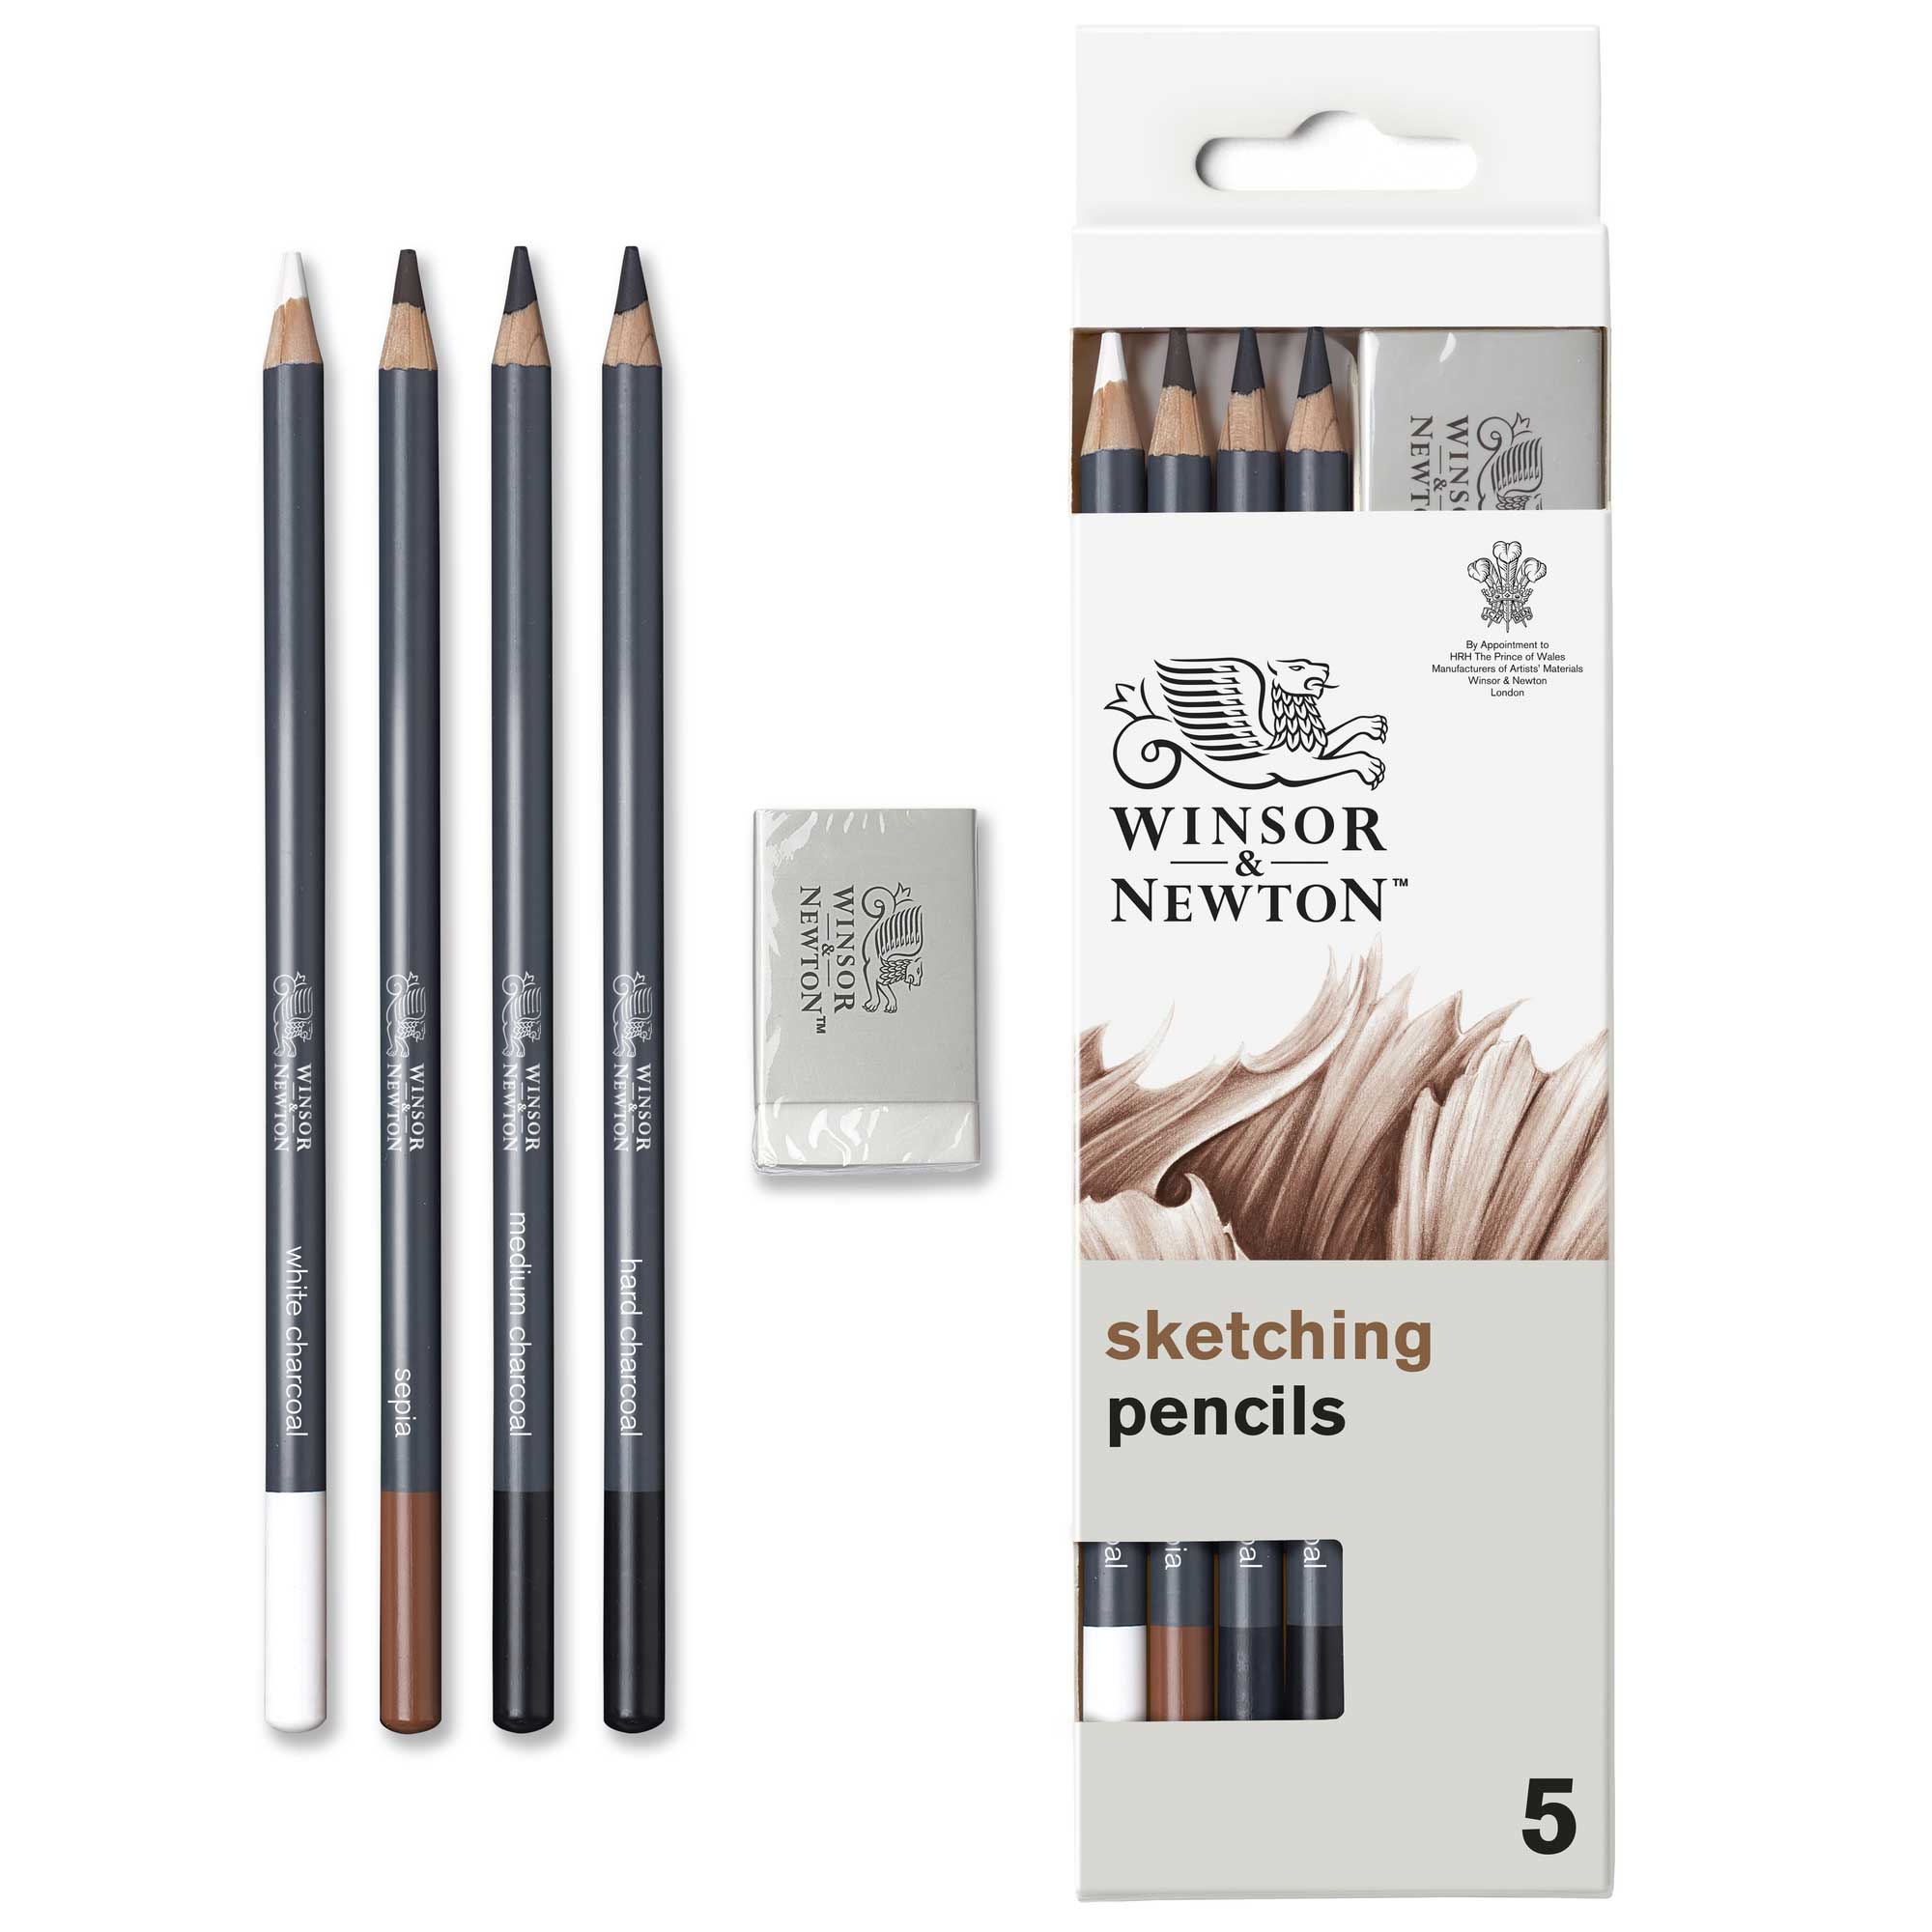 Winsor & Newton Studio Collection Sketching pencils - Set of 5